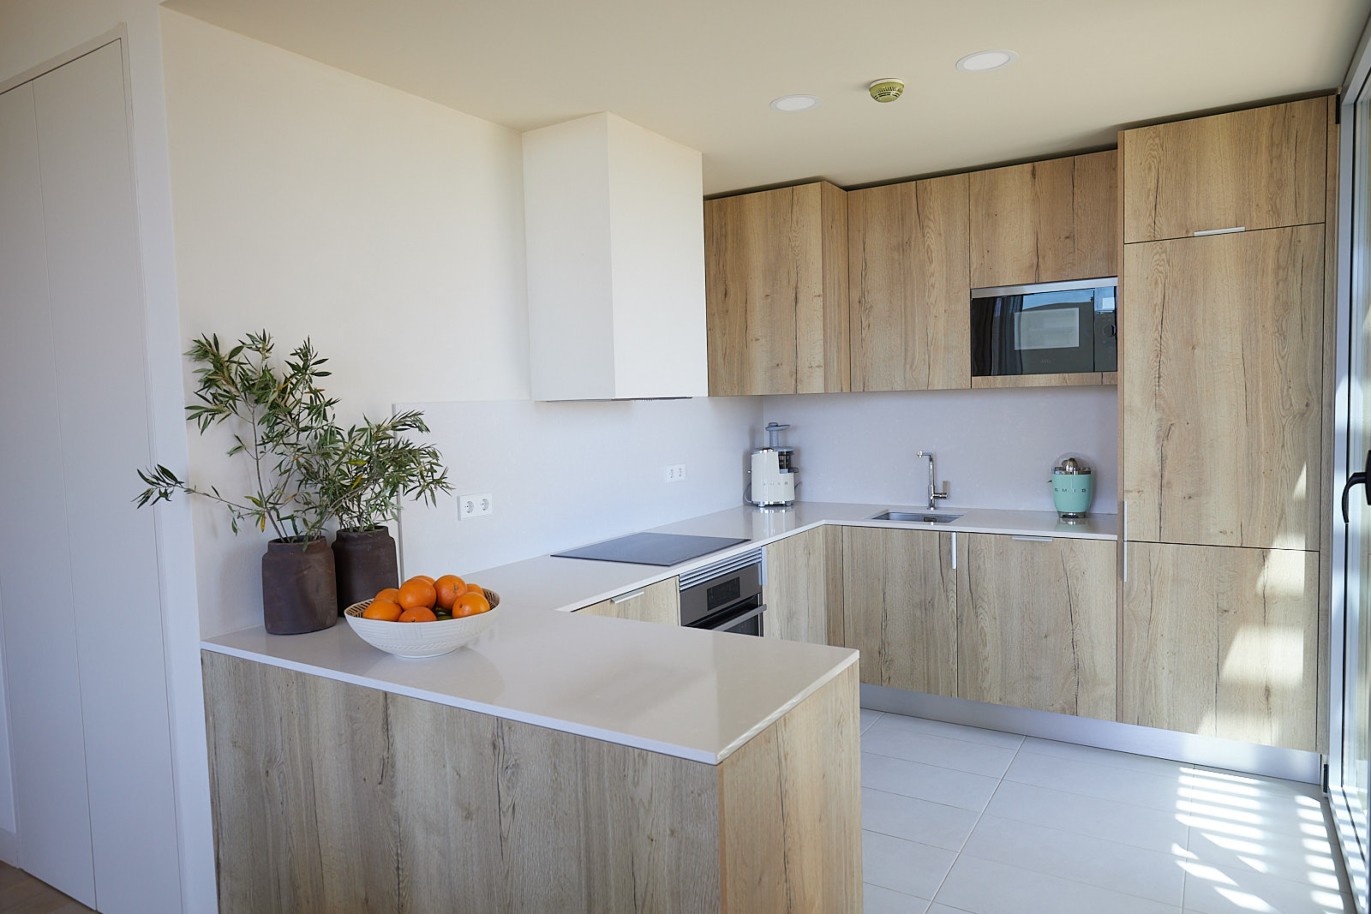 2 bedroom apartment in resort, for sale in Porches, Algarve_229123